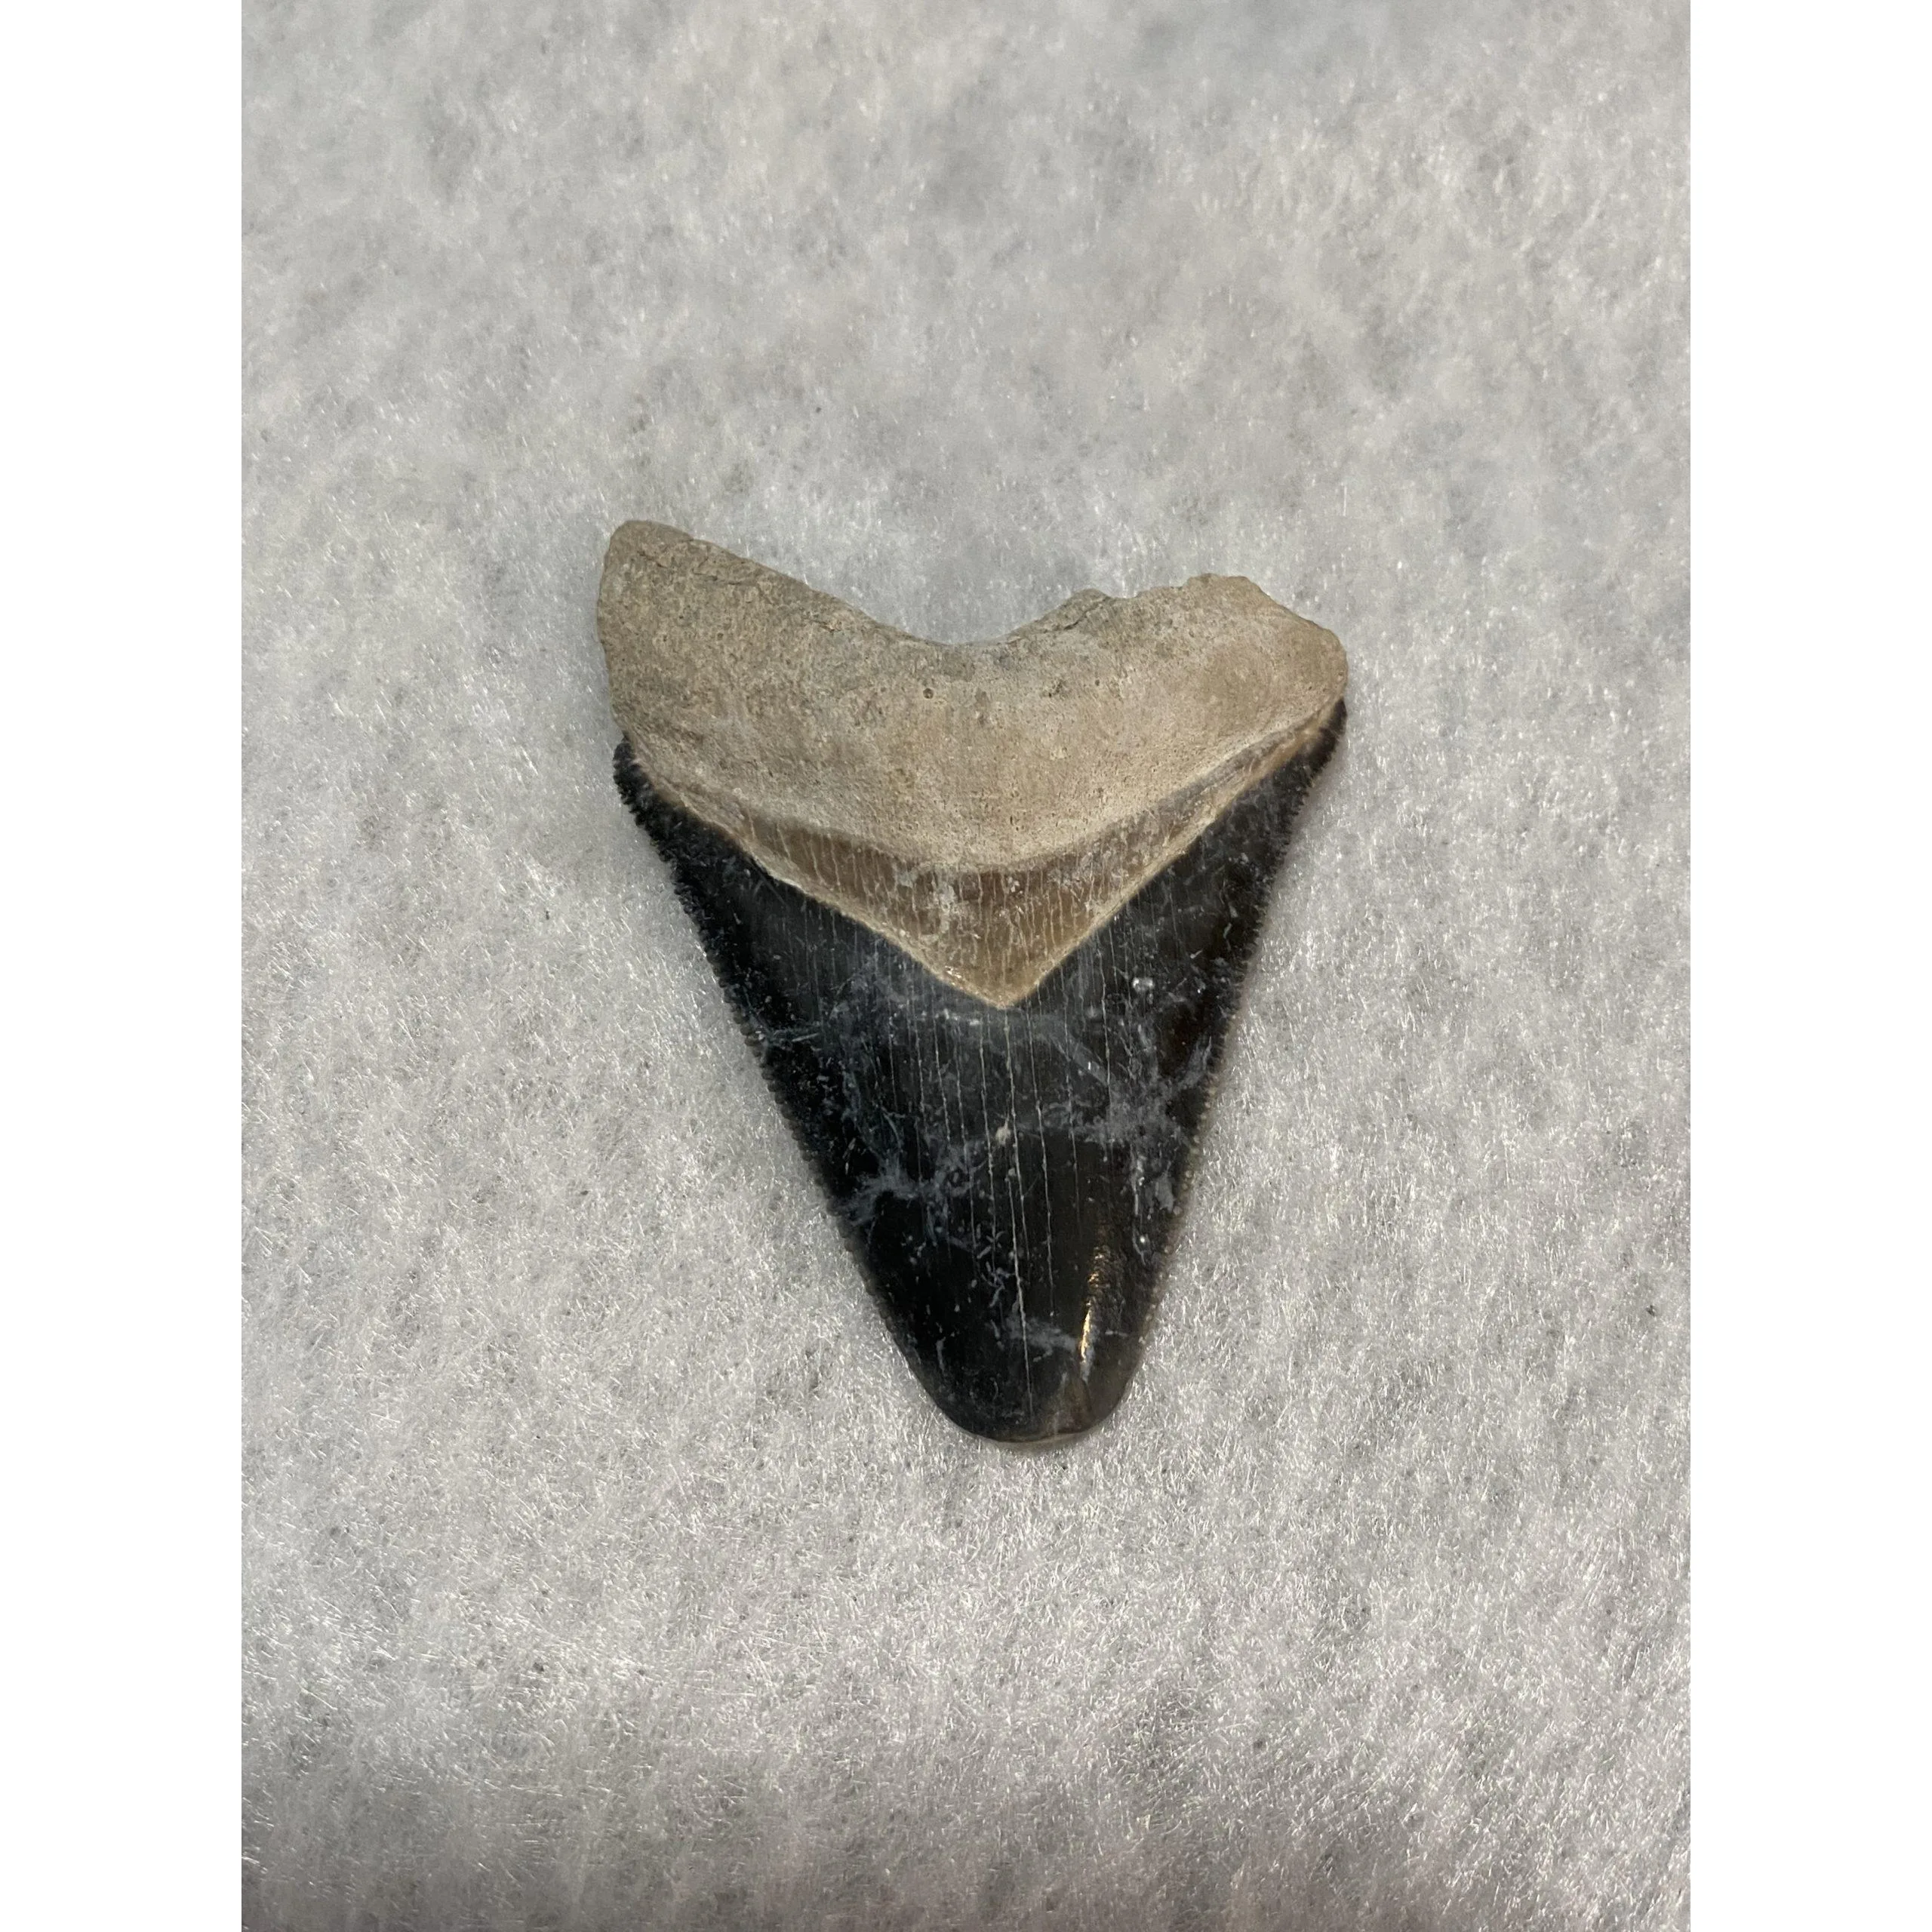 Megalodon Tooth, Bone Valley, Florida, 2.25 inch Prehistoric Online